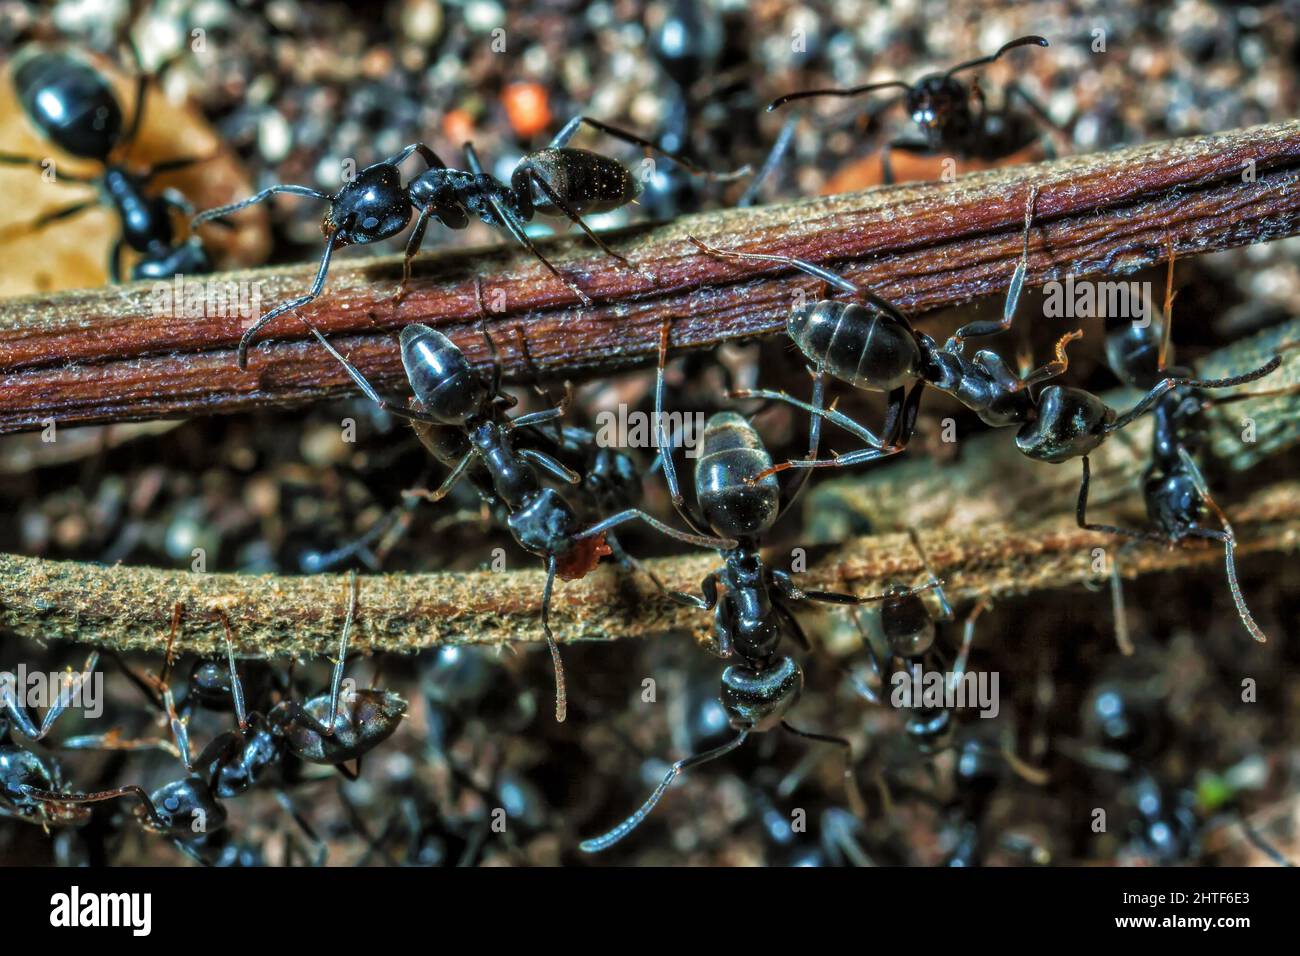 Lasius Niger or Black Garden Ant Stock Photo